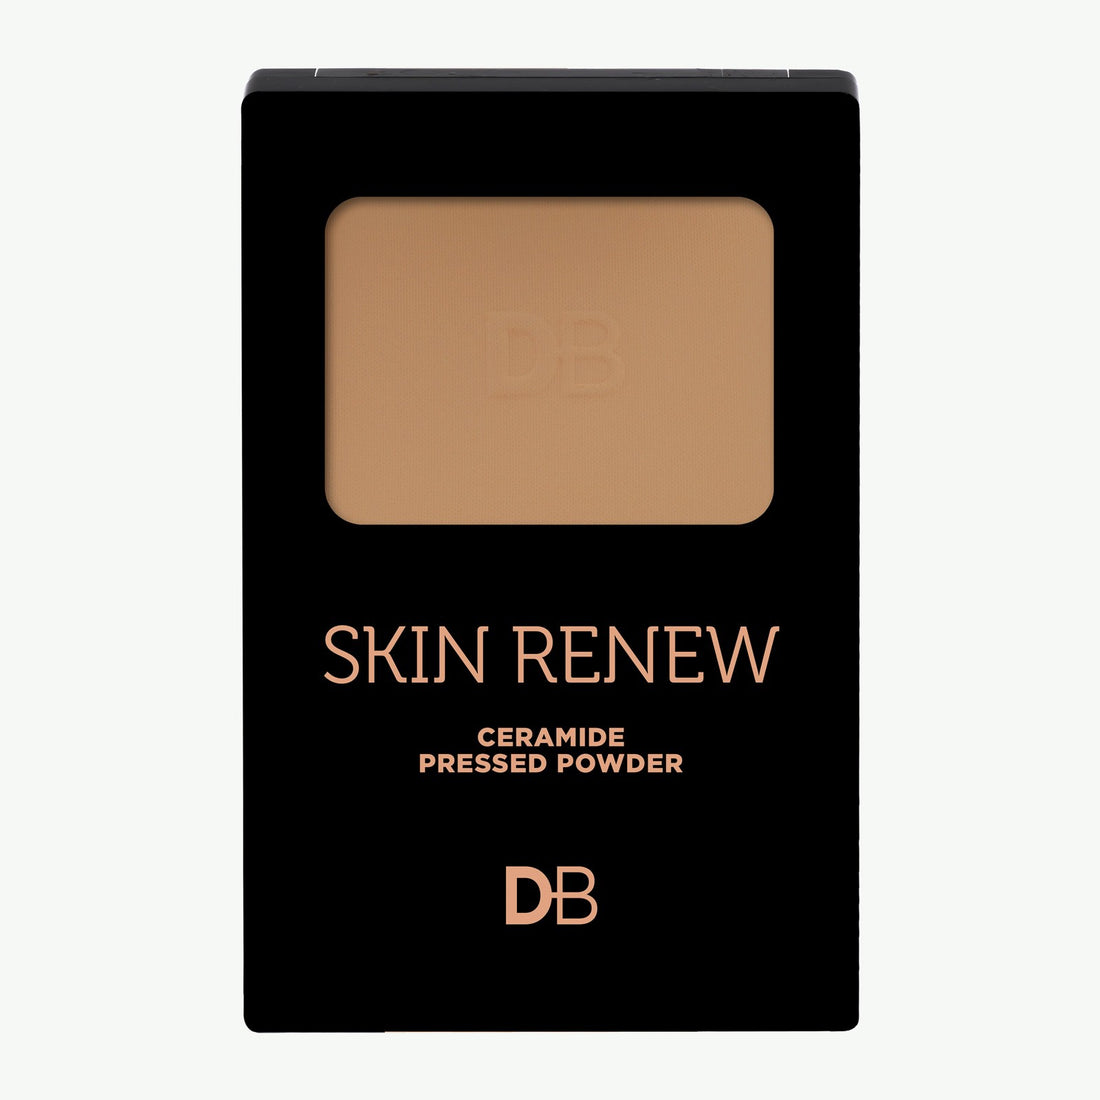 DB Skin Renew Ceramide Pressed Powder